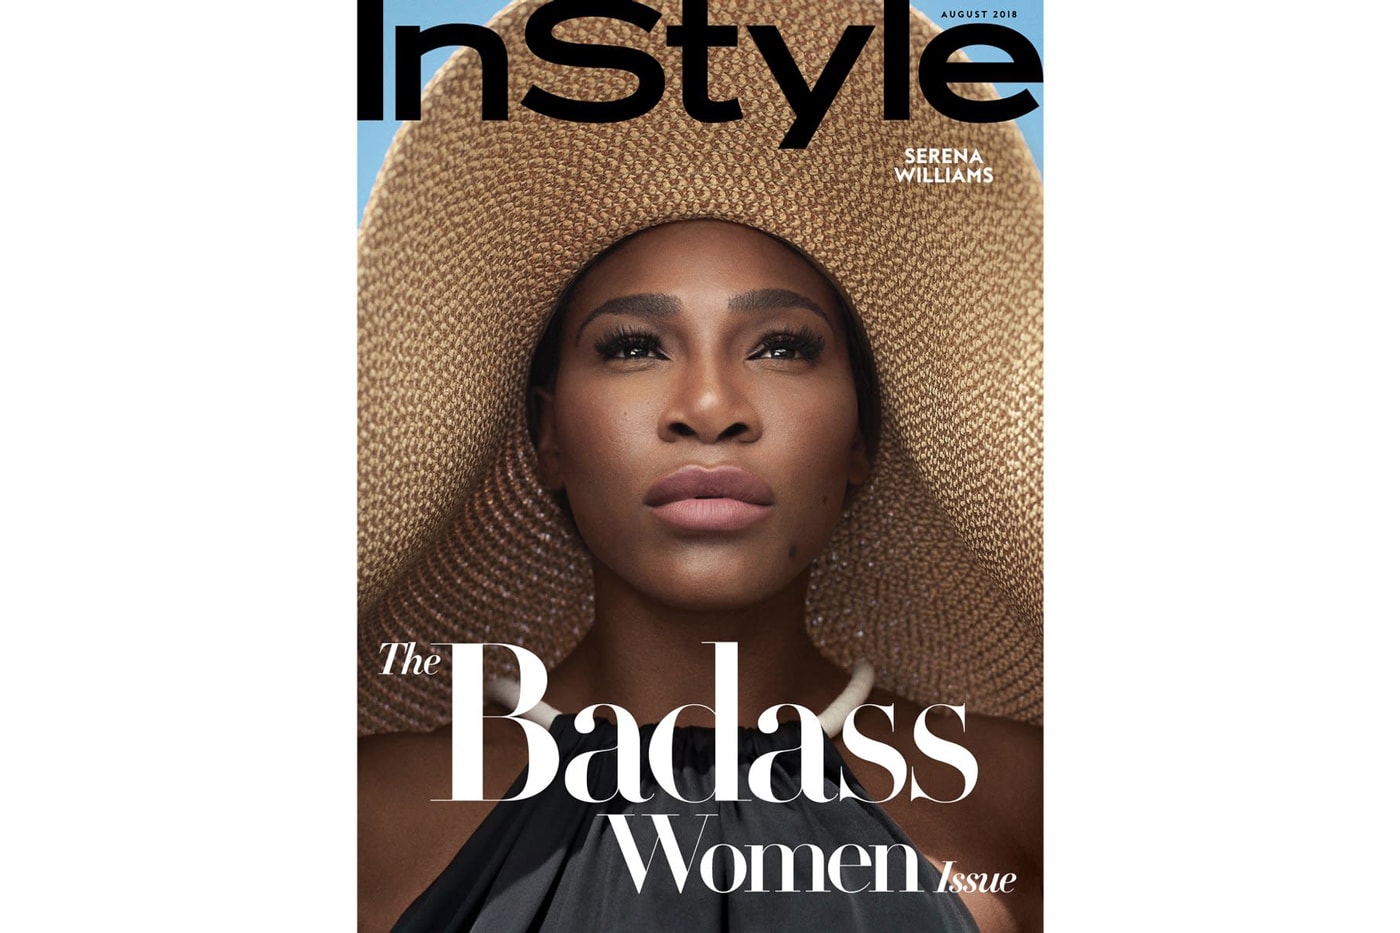 Serena Williams InStyle Magazine August 2018 Badass Woman Issue The Row Dress Eric Javitz Hat Black Tan